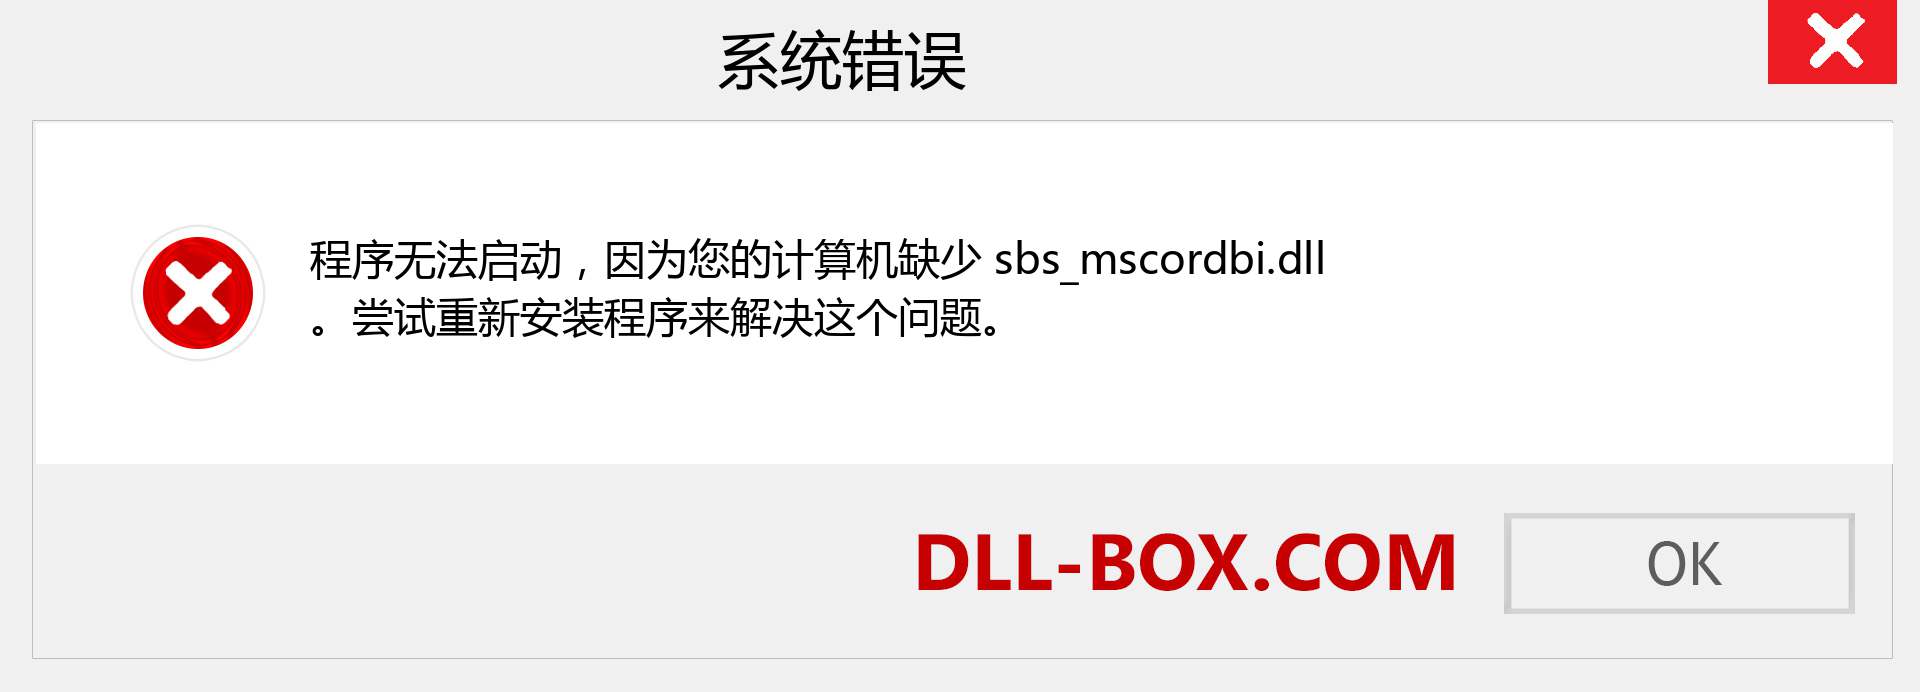 sbs_mscordbi.dll 文件丢失？。 适用于 Windows 7、8、10 的下载 - 修复 Windows、照片、图像上的 sbs_mscordbi dll 丢失错误